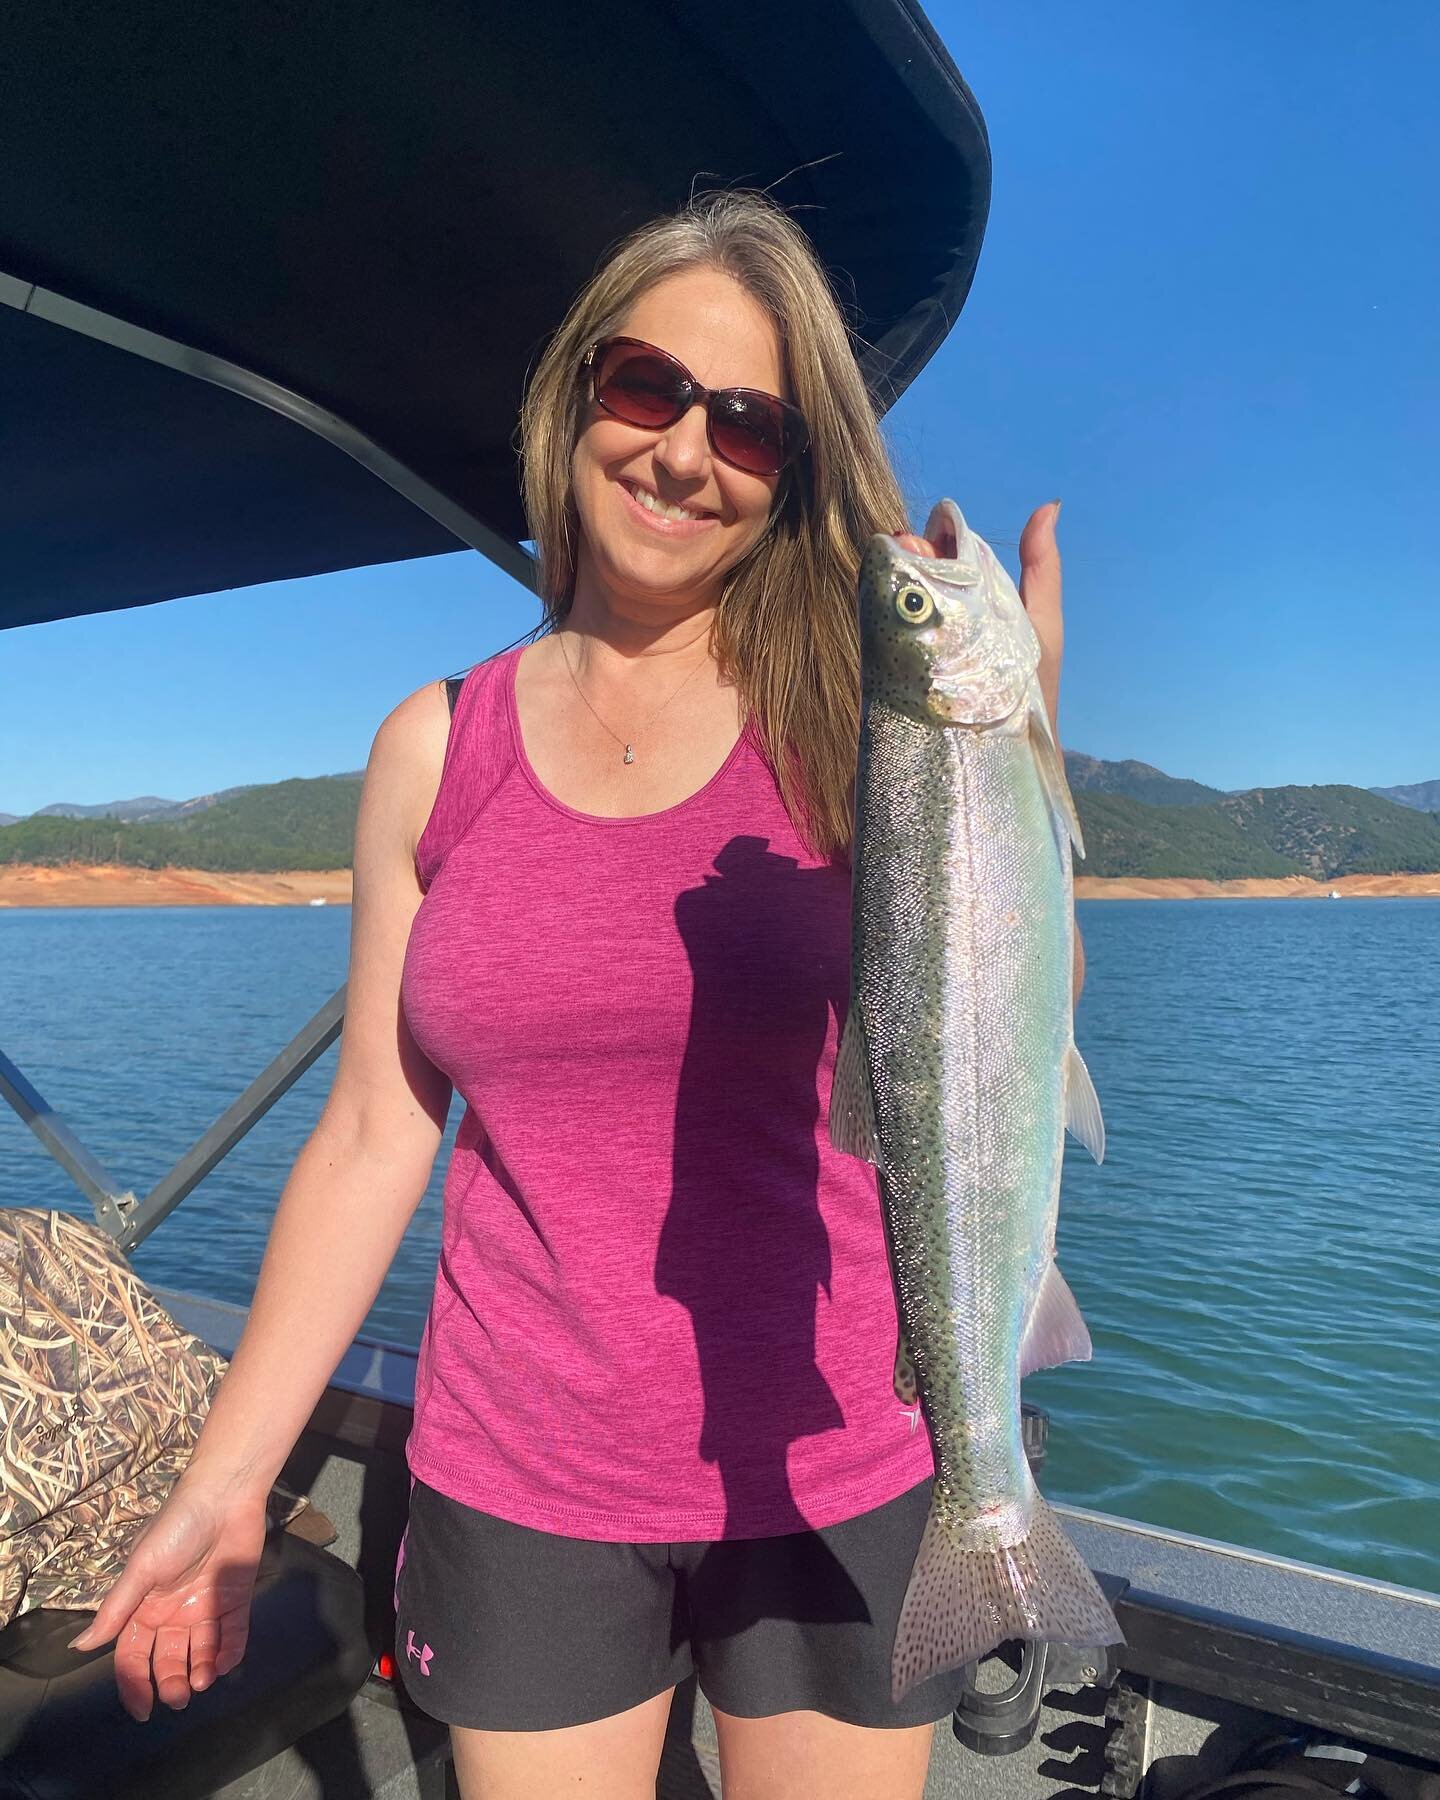 #jtfishingredding another good day to be on Shasta lake filling the zip-locks with fresh salmon, Kokanee salmon and rainbow trout. @jeffgoodwinfishingteam 
.
.
.
@pautzke_bait @bradskillerfishinggear #shasta #shastalake #salmonfishing #kingsalmon #sa